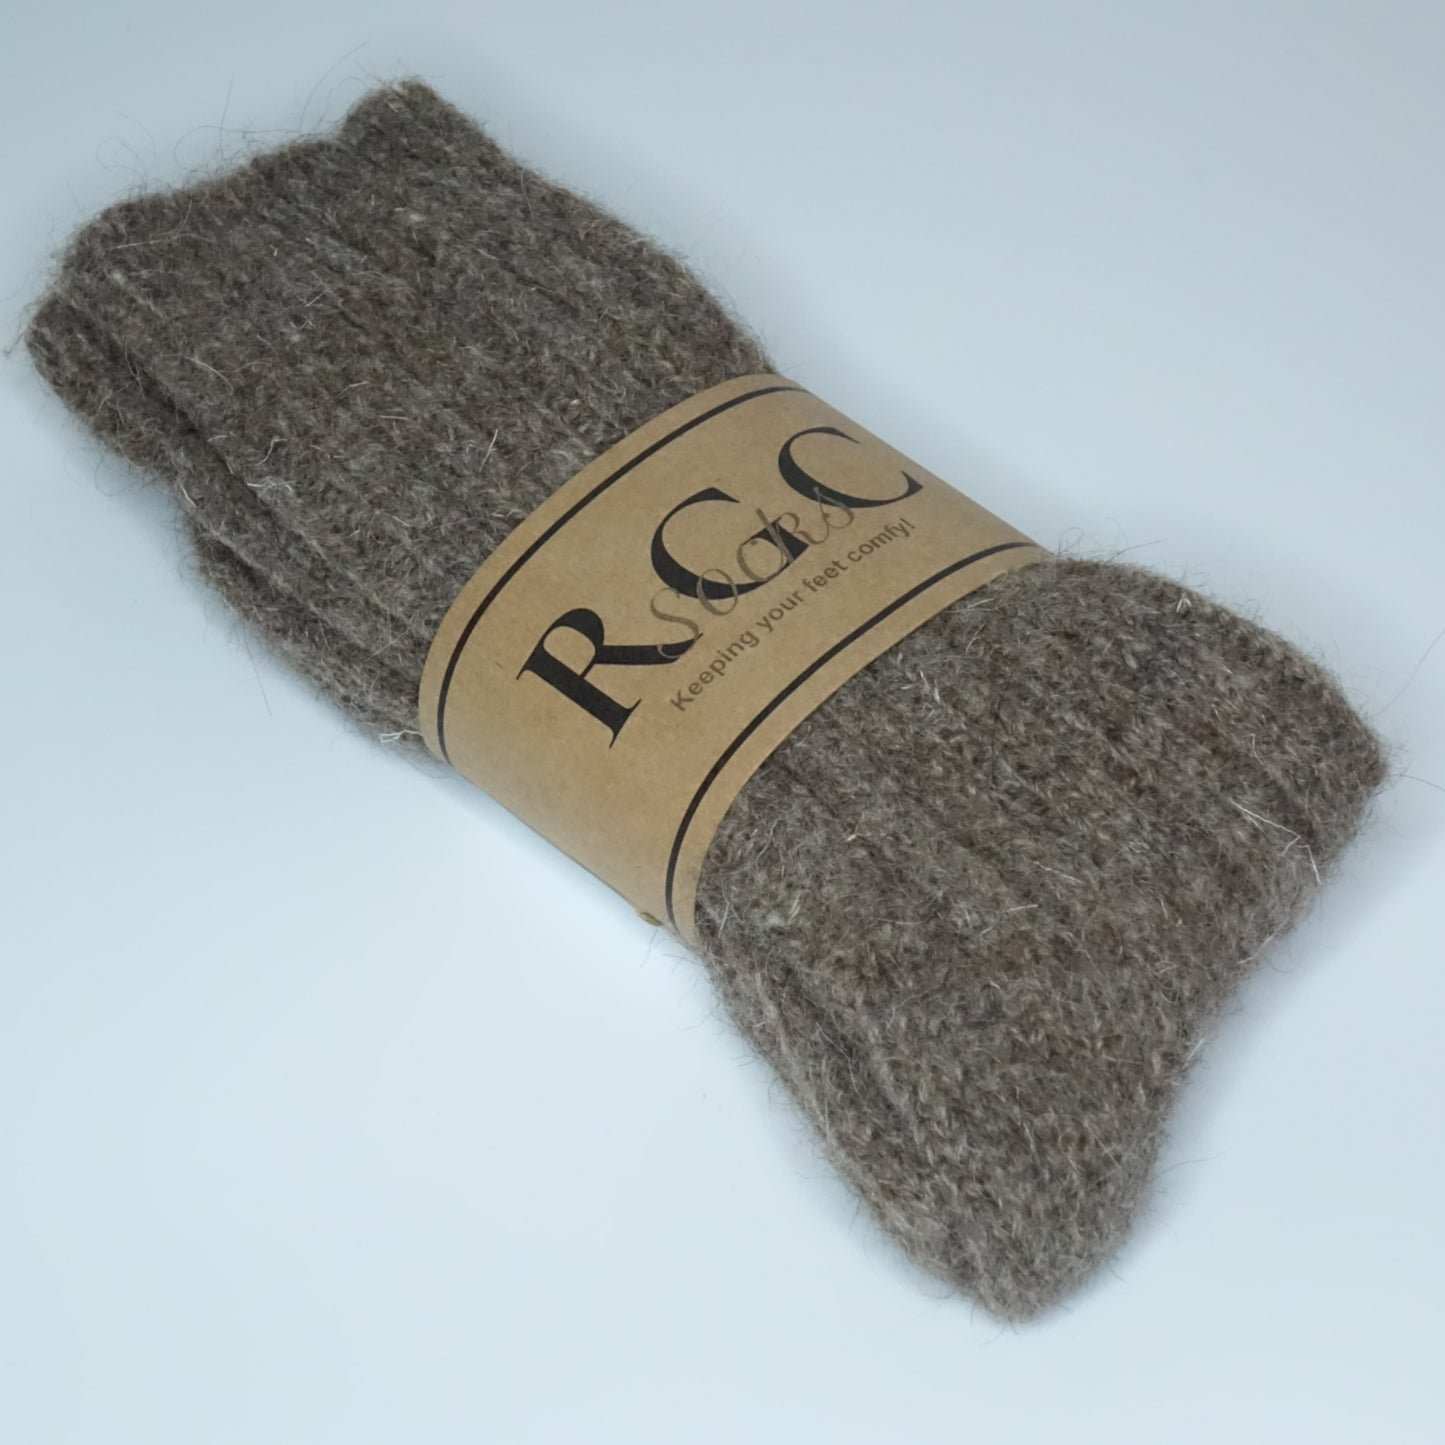 rgc socks bythemountain socks alpaca brown wool socks 0